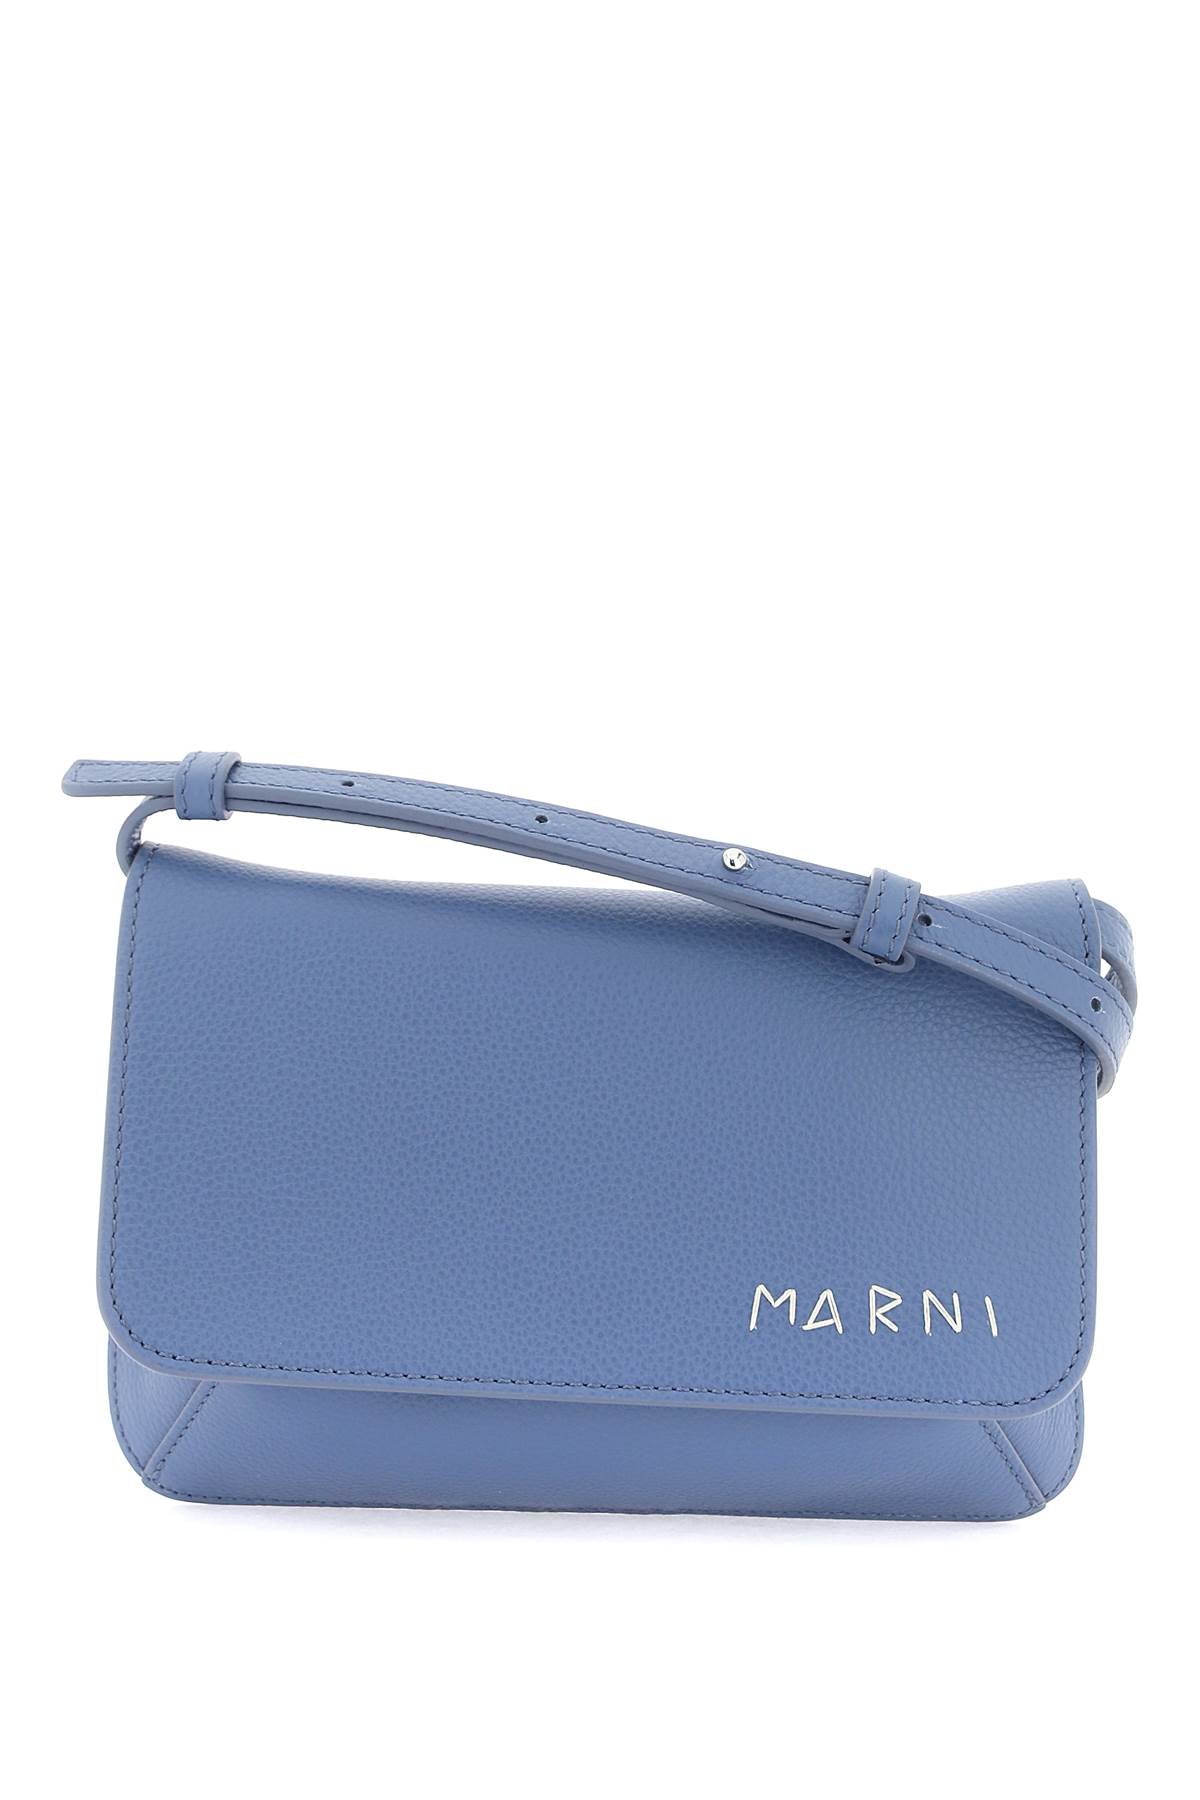 Marni flap trunk shoulder bag with-0